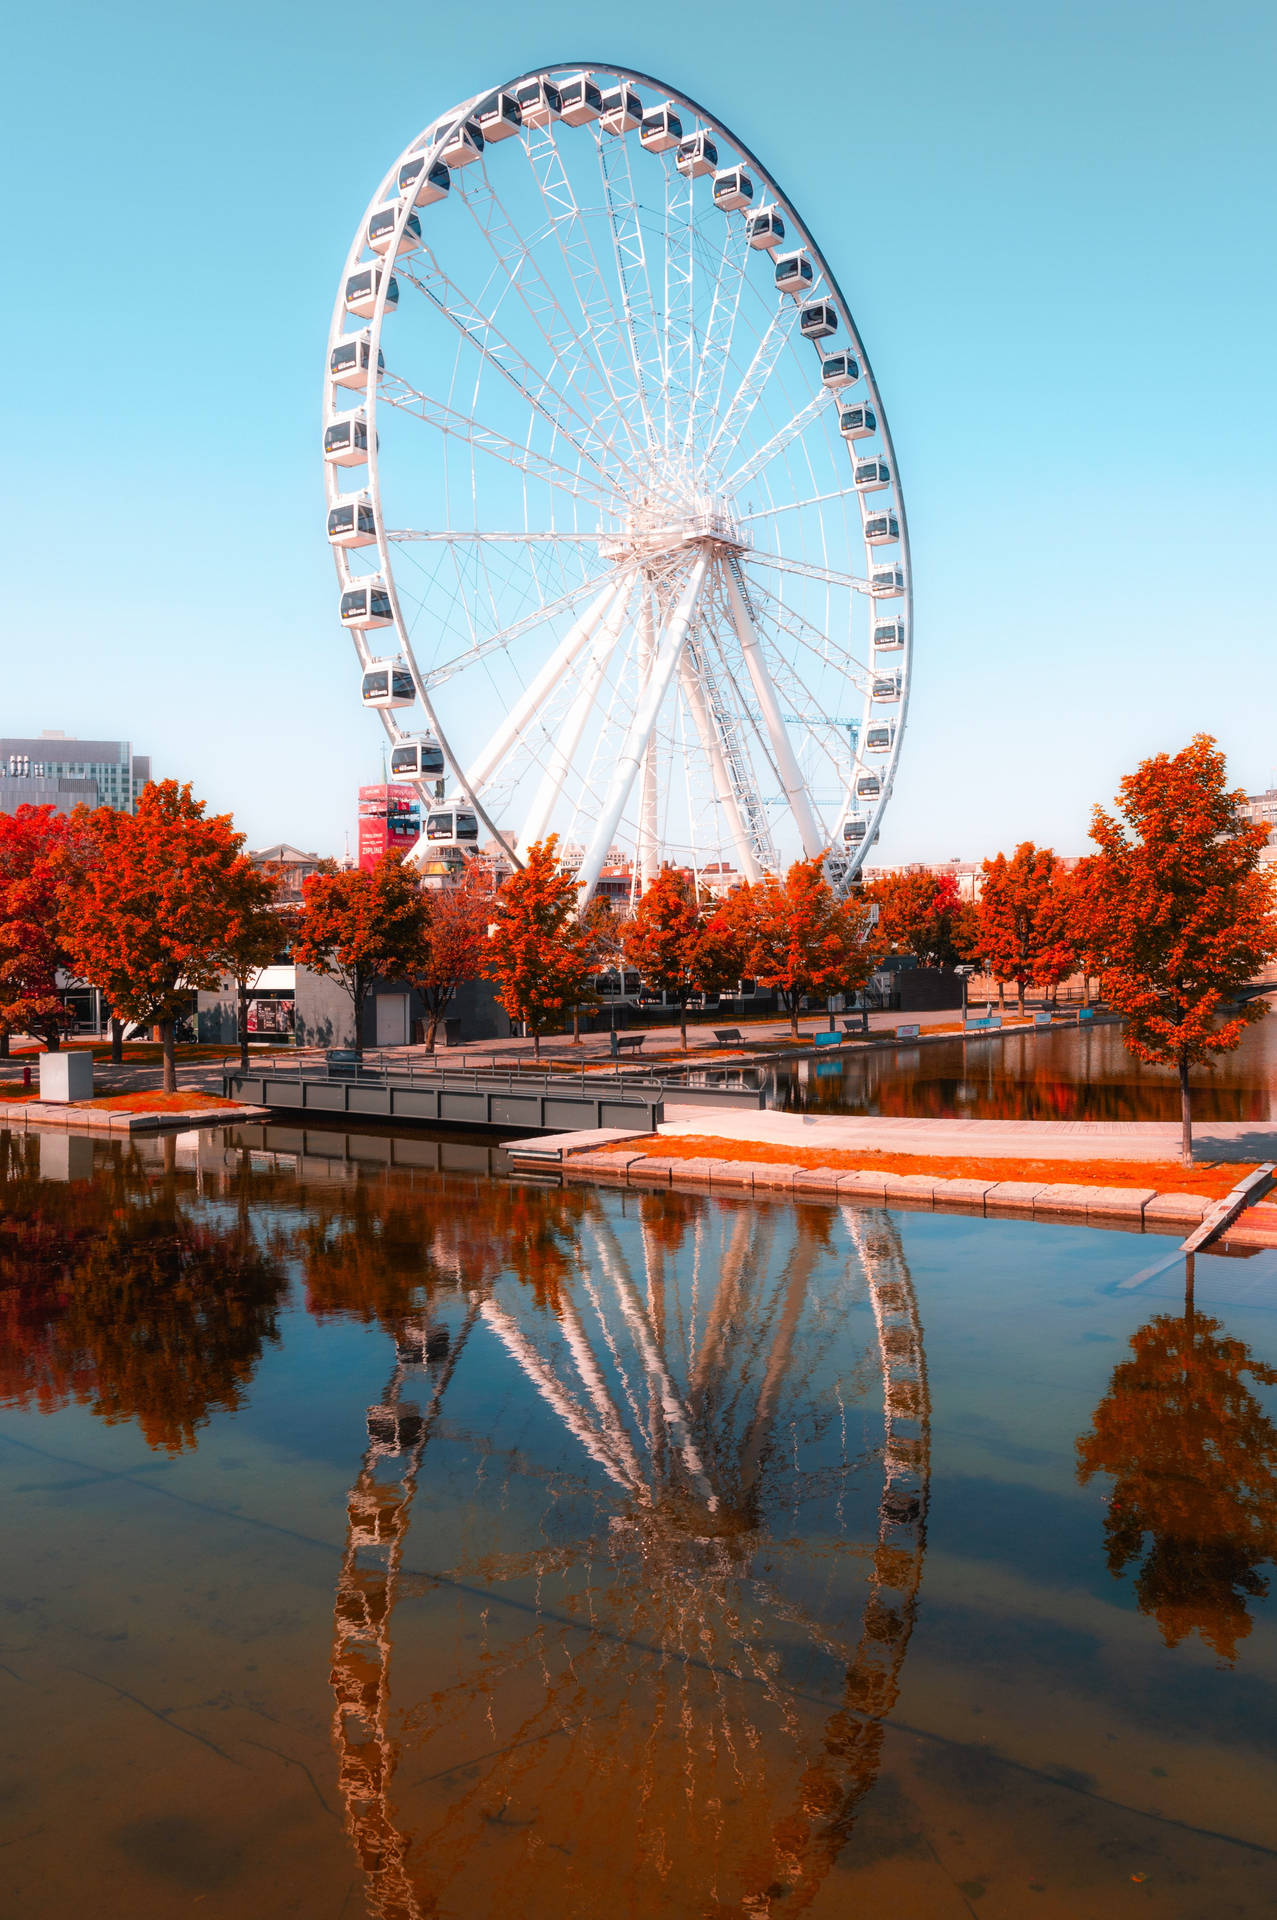 Aesthetic Fall Ferris Wheel Picture